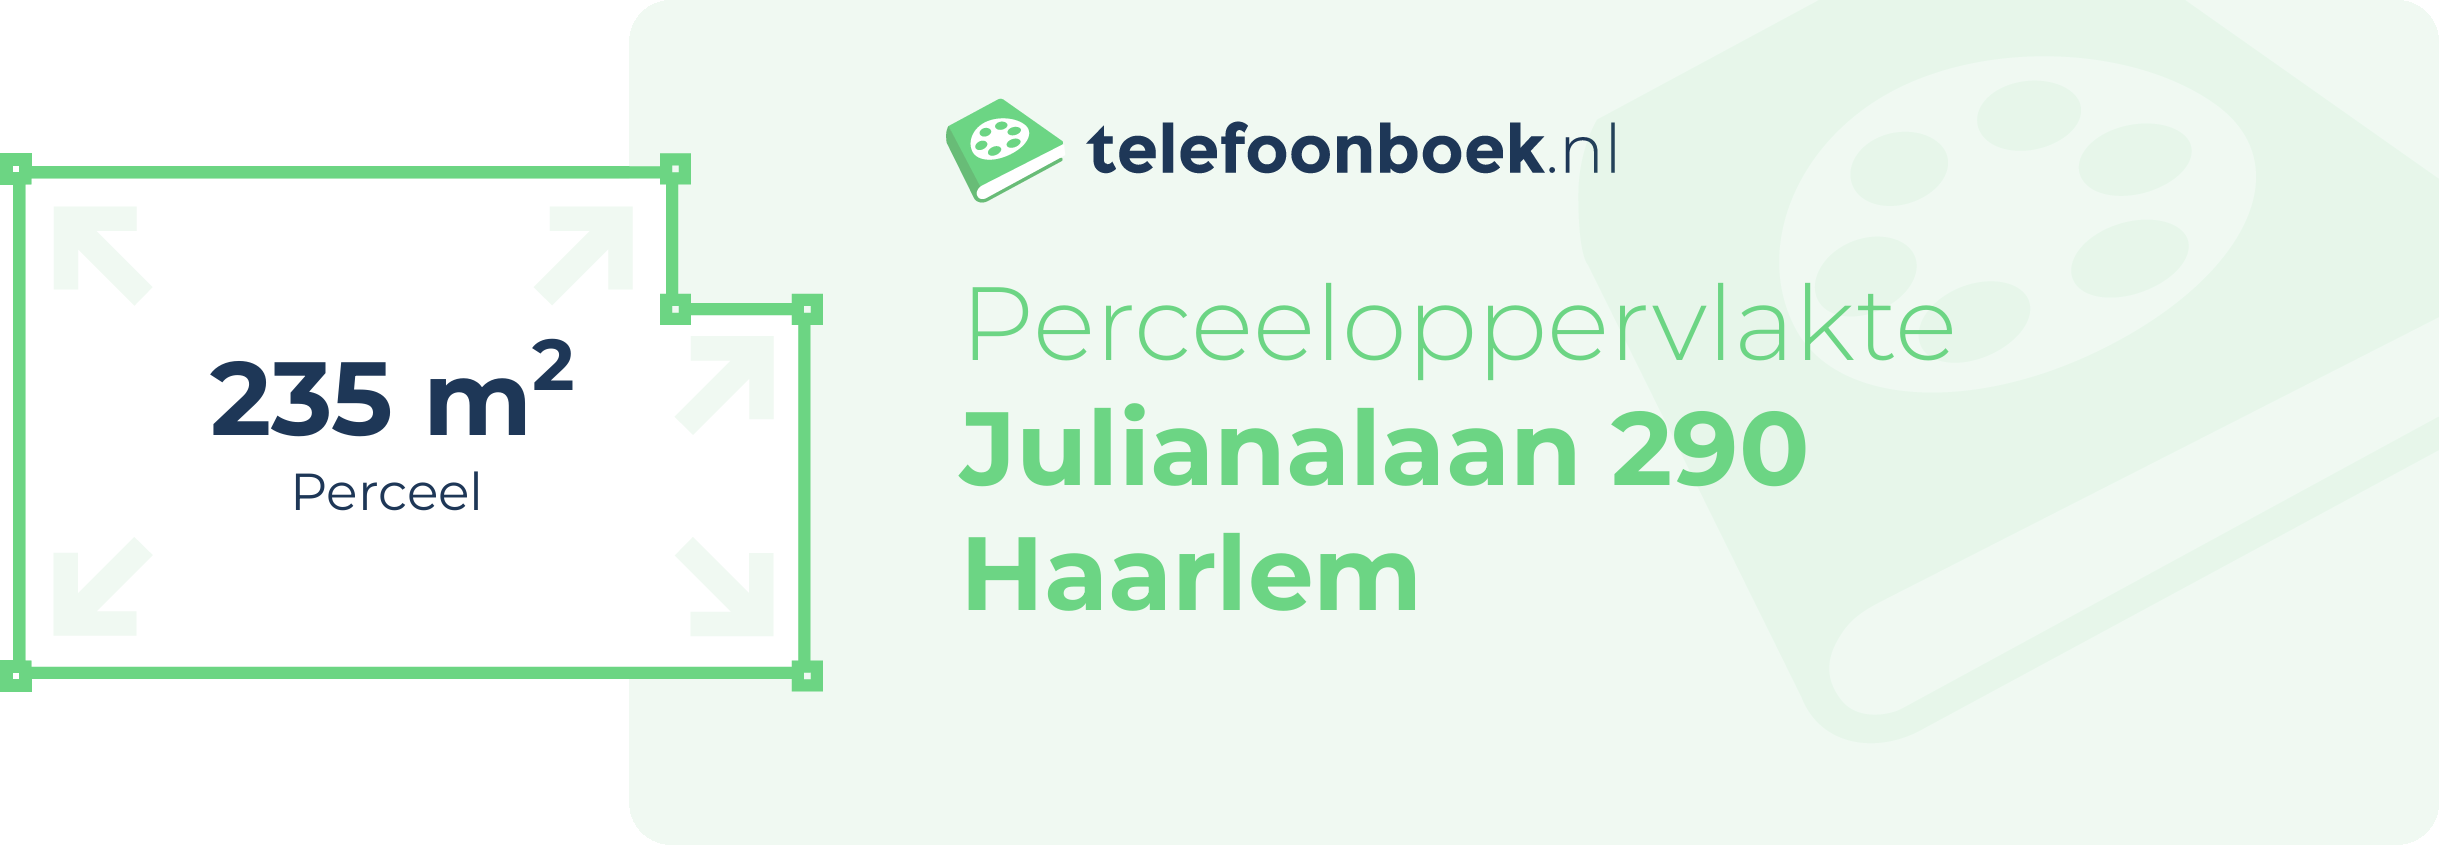 Perceeloppervlakte Julianalaan 290 Haarlem